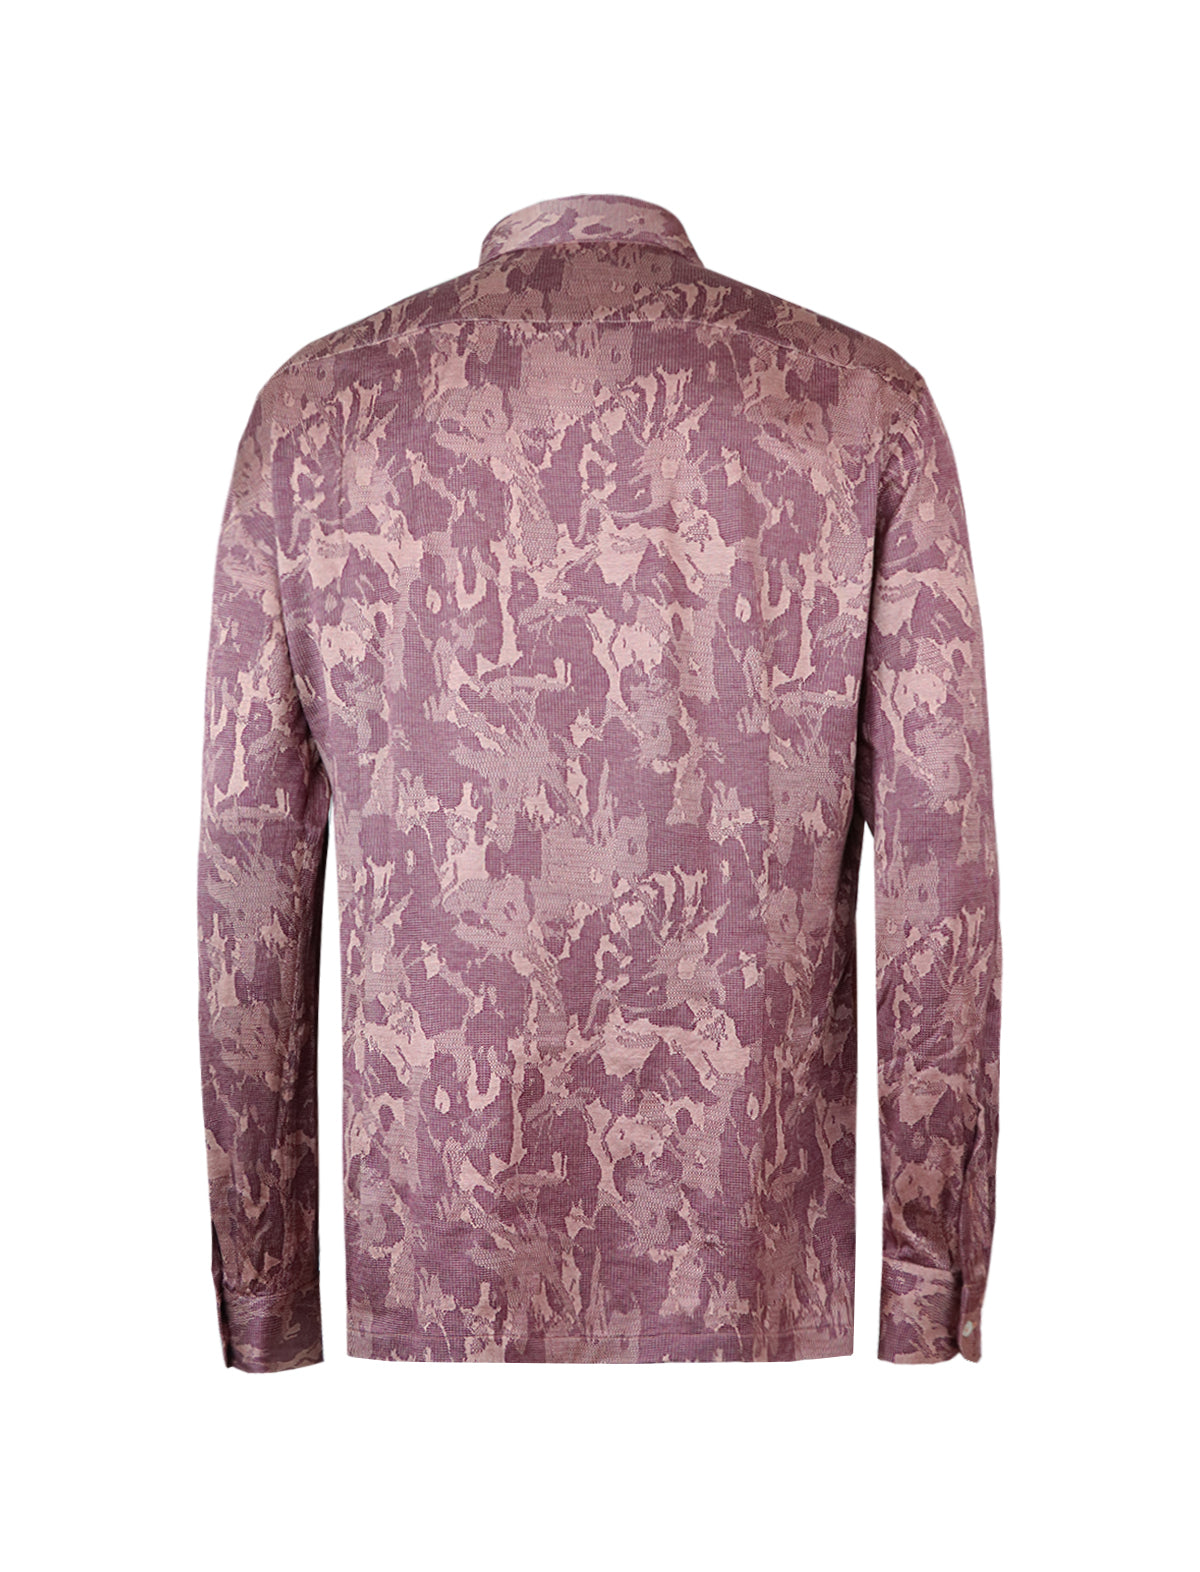 LARDINI Jersey Printed Long-Sleeved Top in Pink